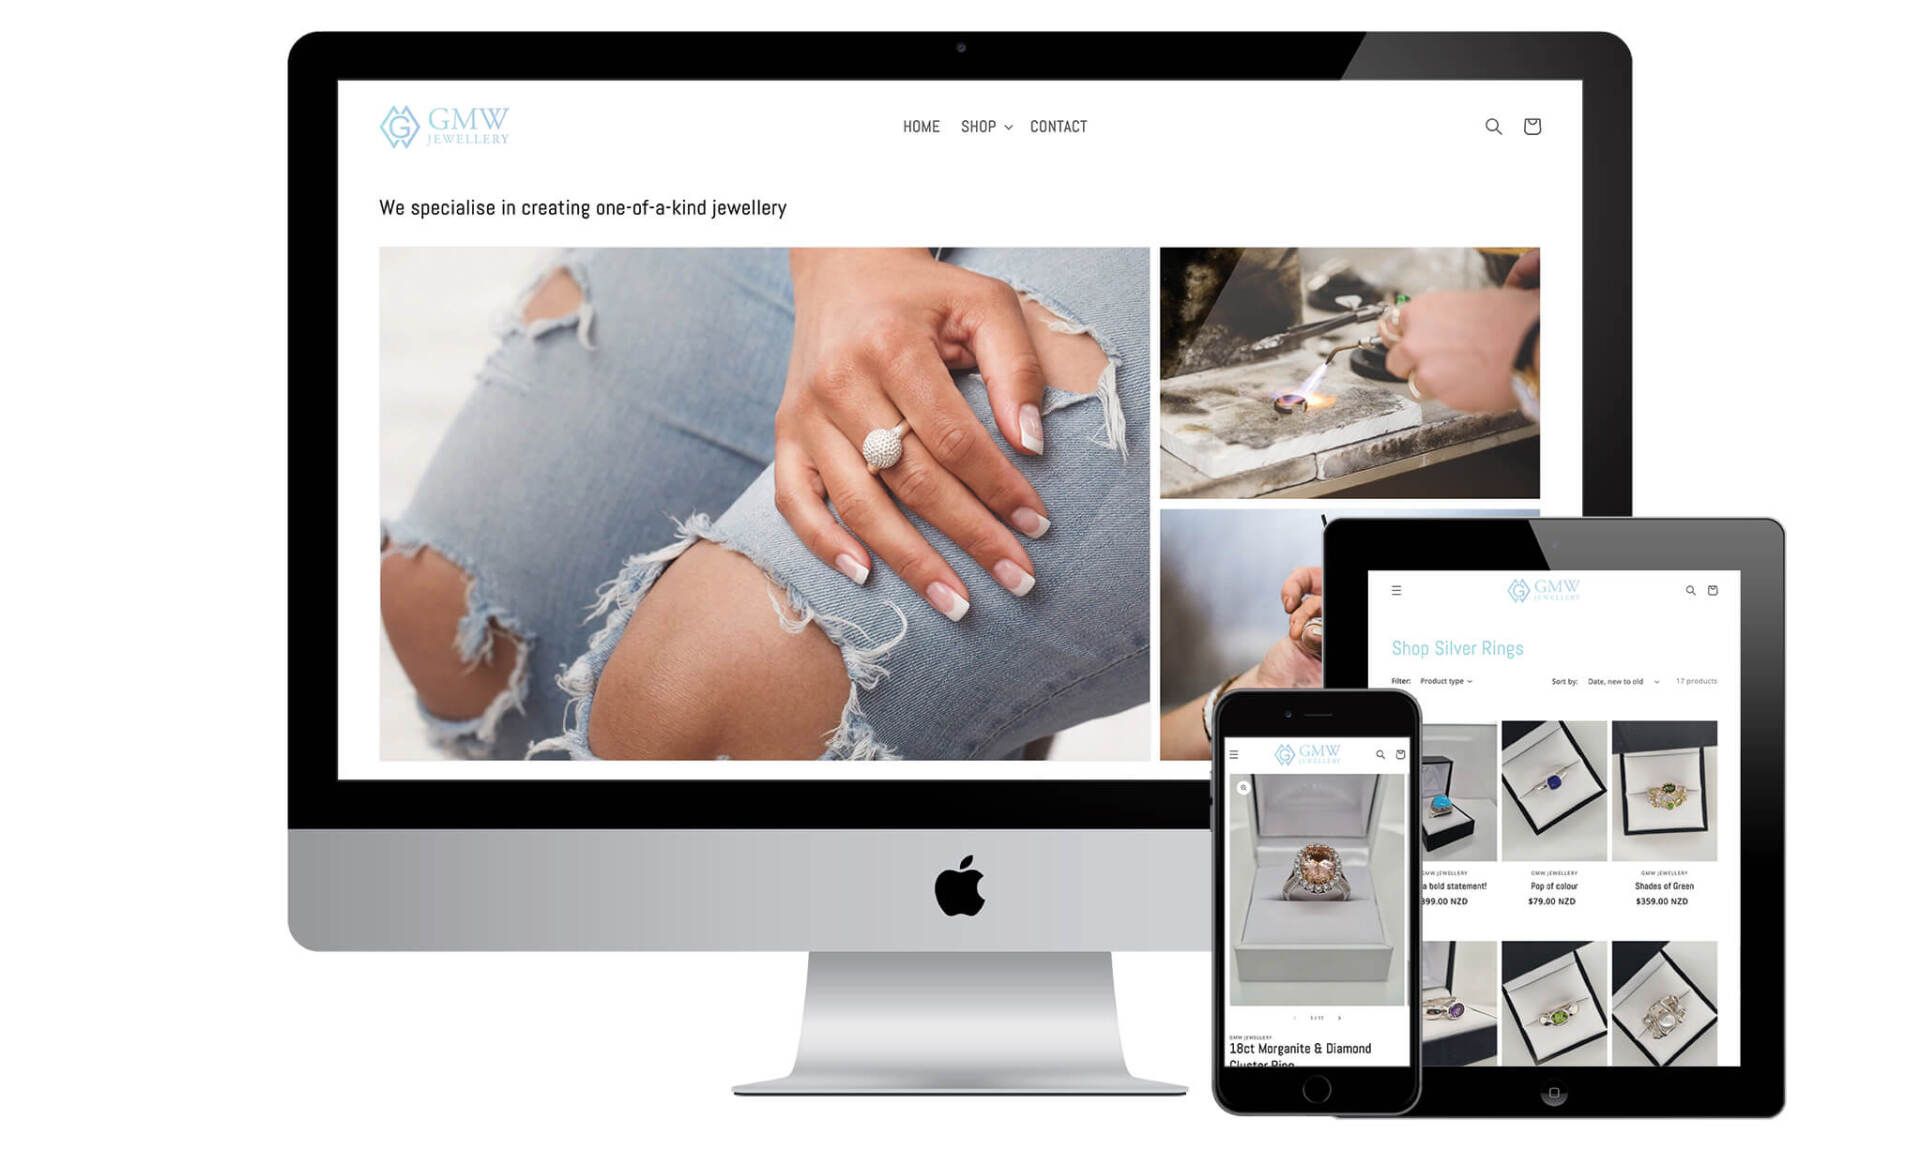 GMW Jewellery shop website designed by Vanilla Hayes creative graphic design  studio in Blenheim, Marlborough, New Zealand